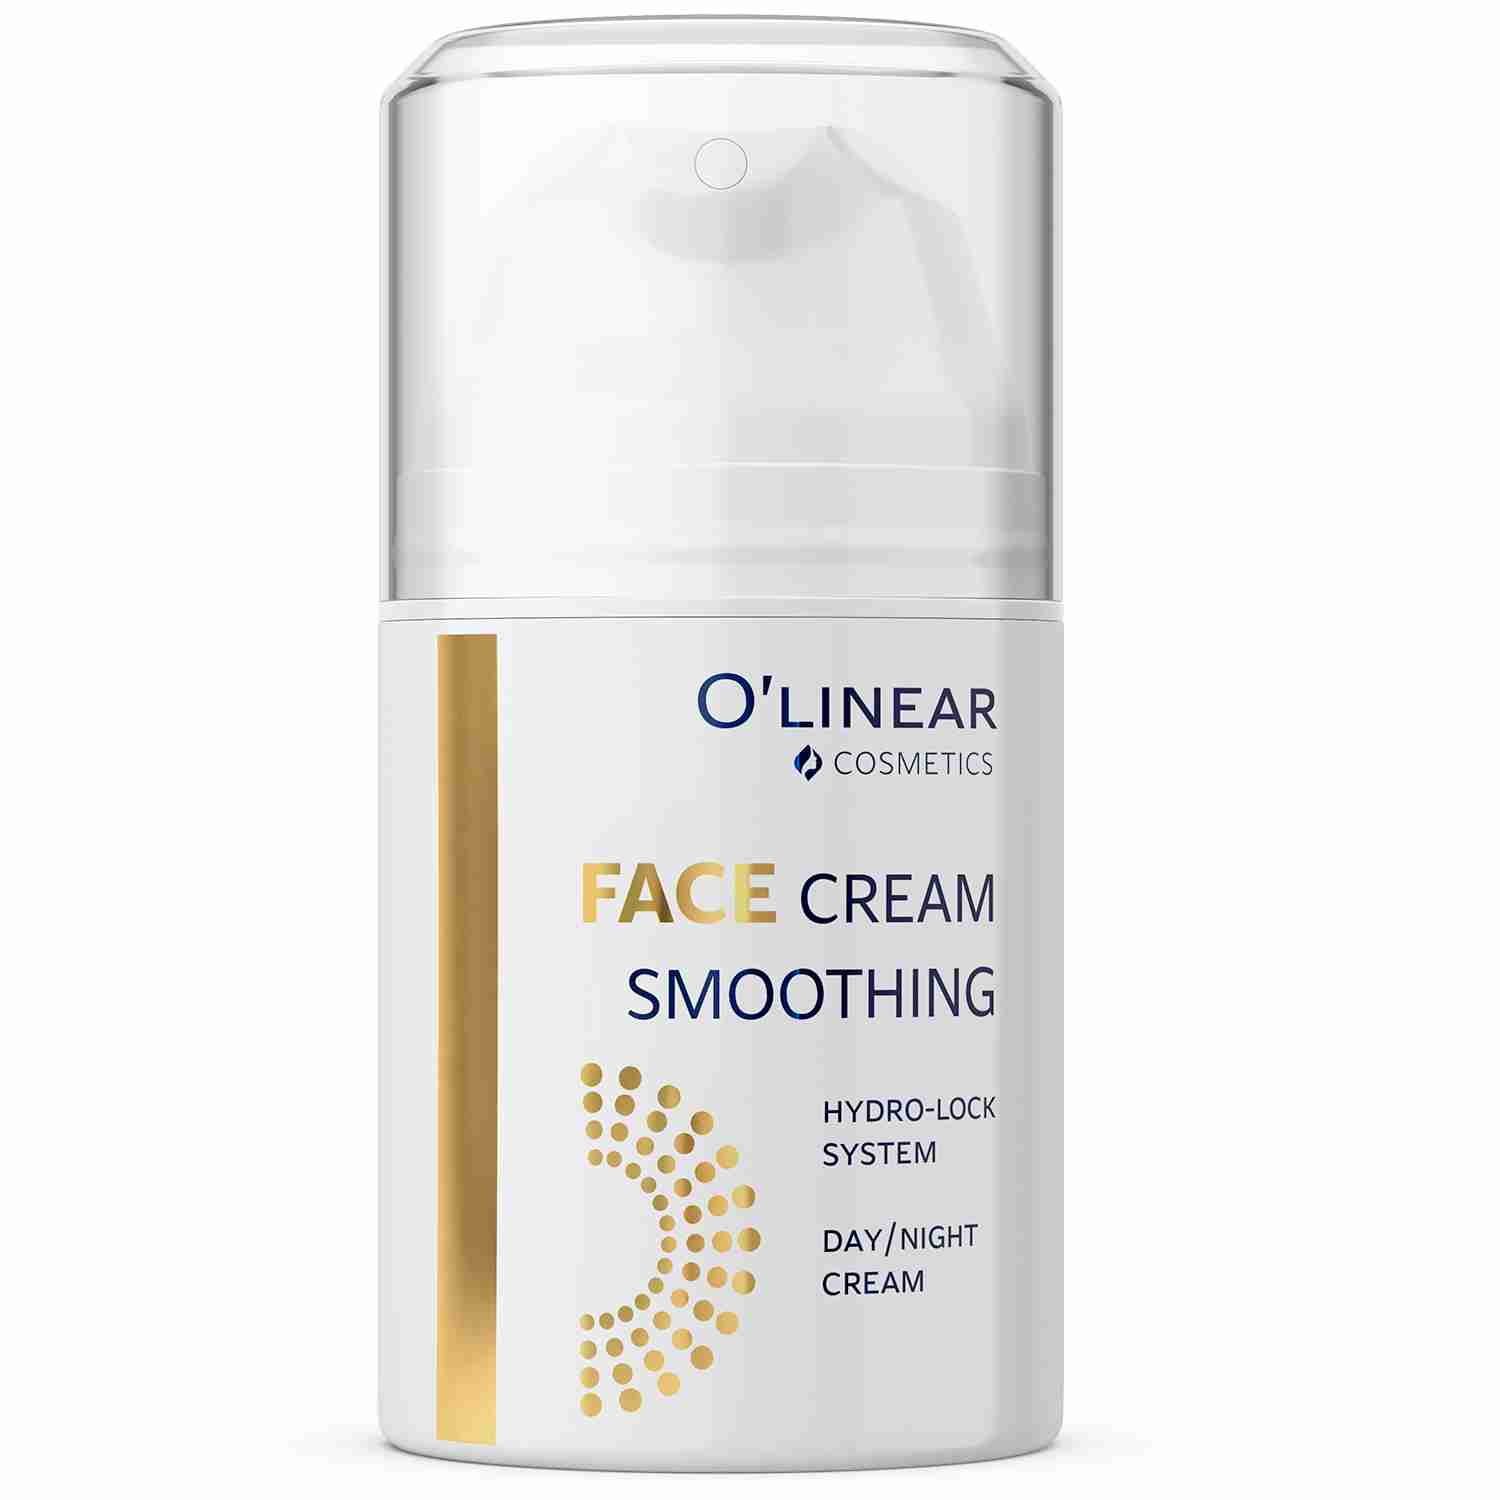 face-cream-moisturizer with cash back rebate